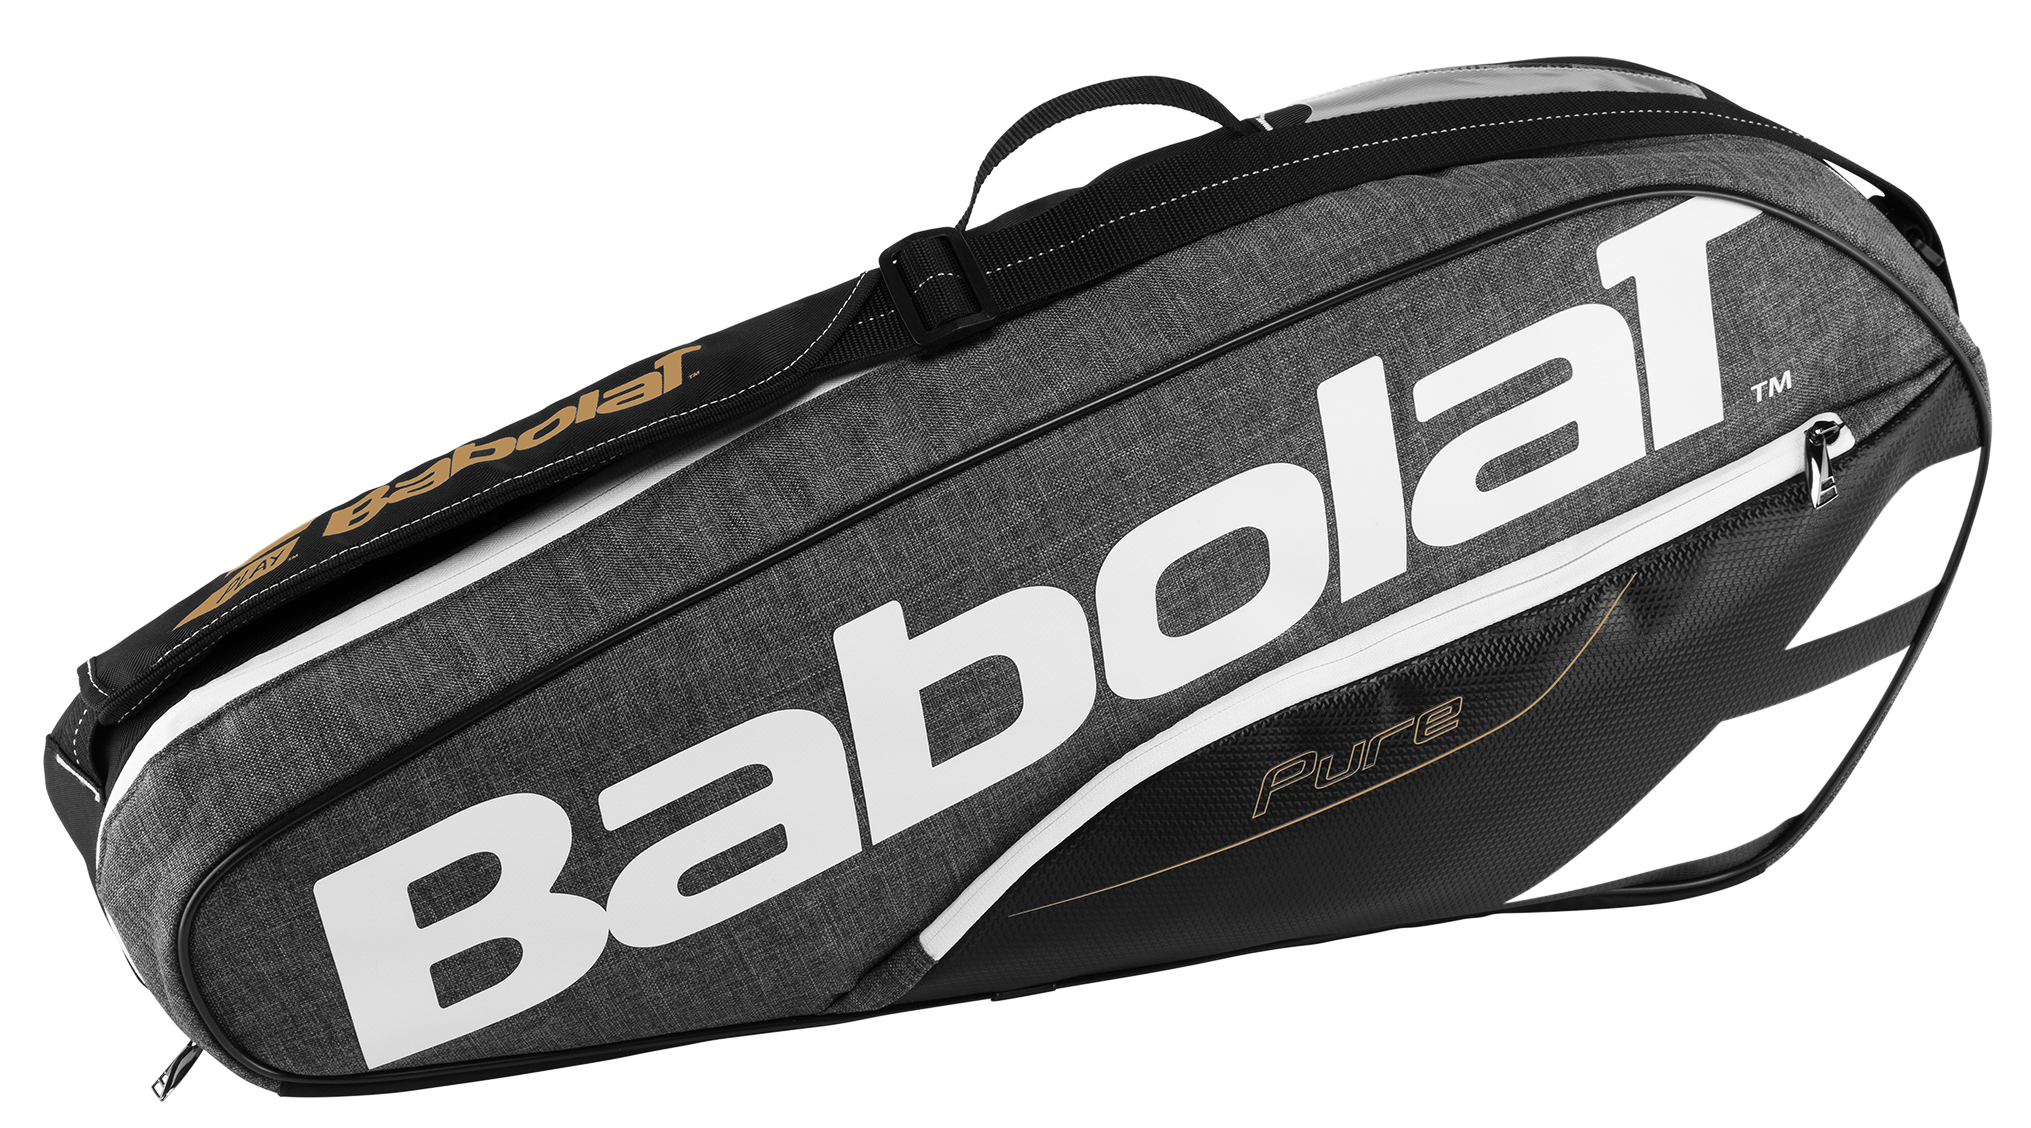 Play Babolat Tennis Bag Racket Holder x 6 Pure Drive Orange Black